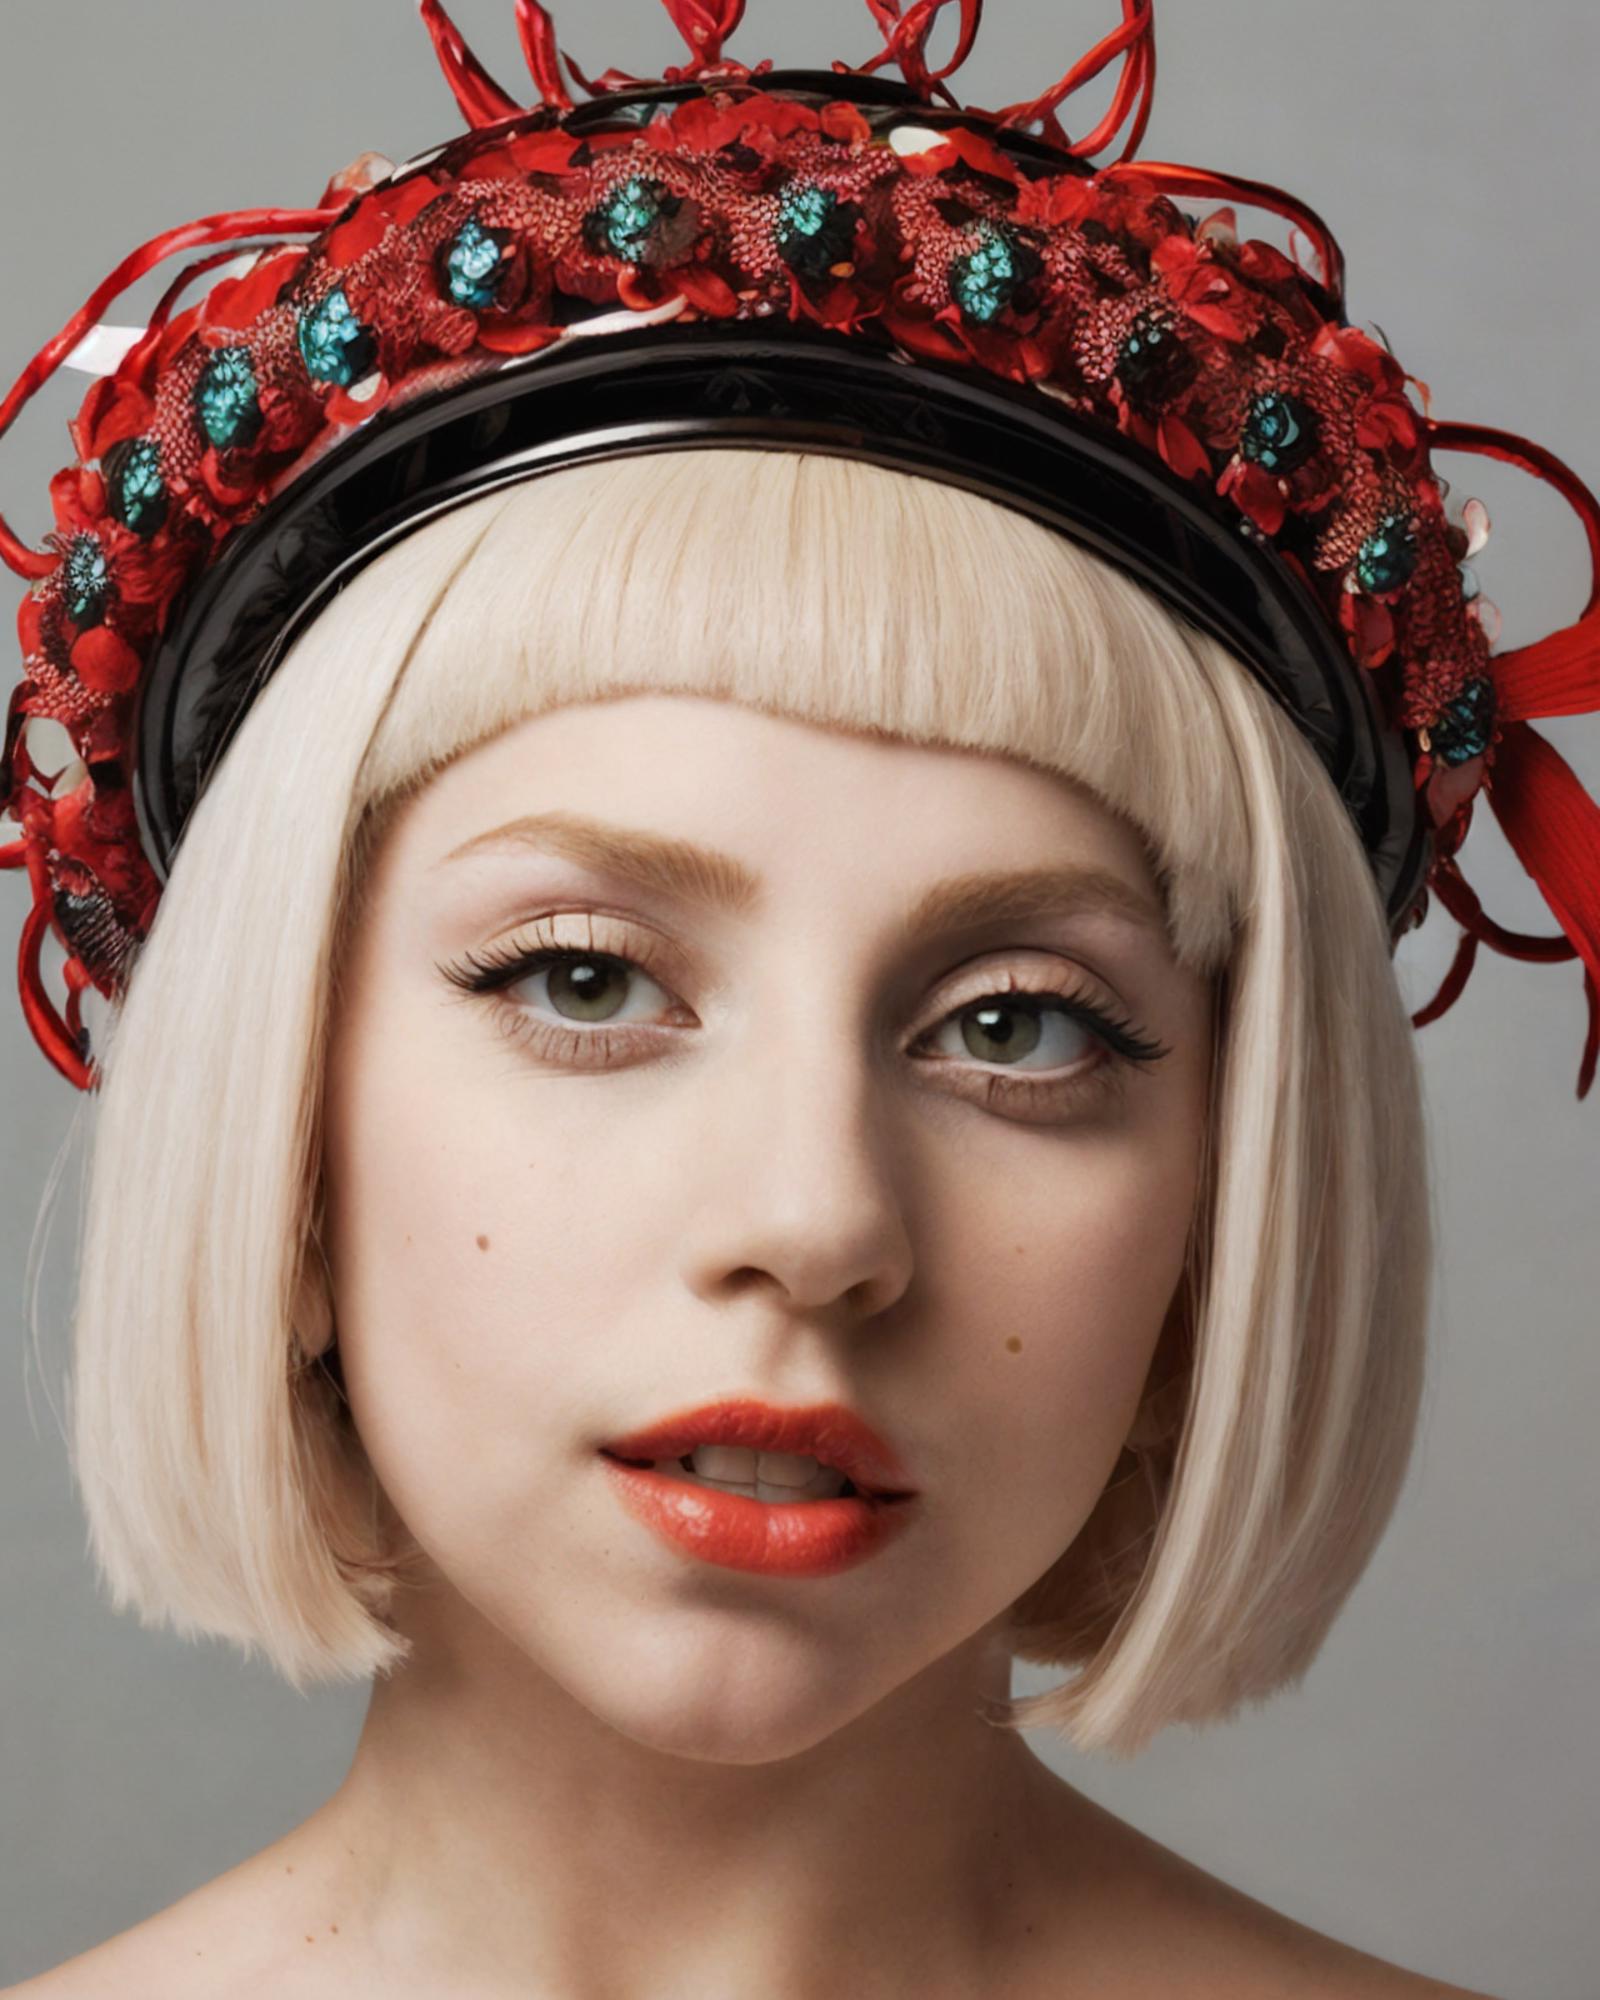 Lady Gaga (2008-2014) image by diffusiondesign